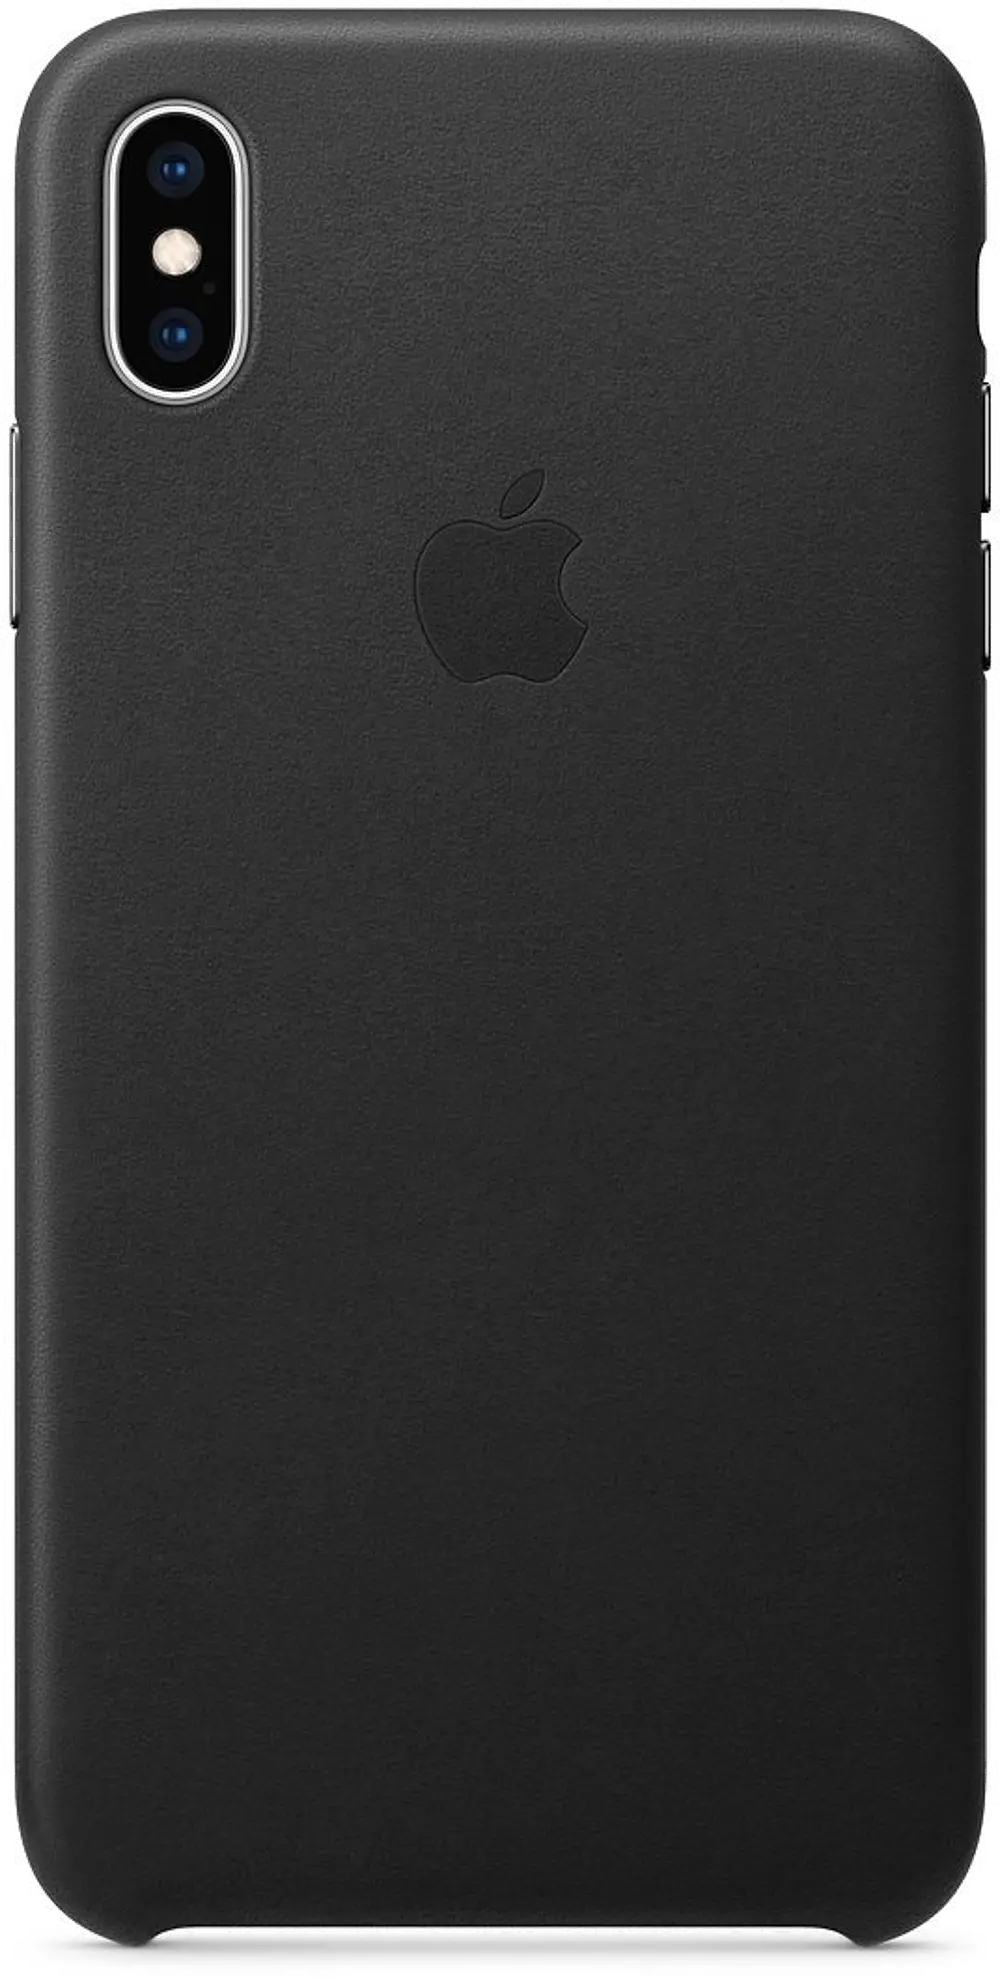 MRWT2ZM/A,XSM,CASE iPhone XS Max Leather Case - Black-1